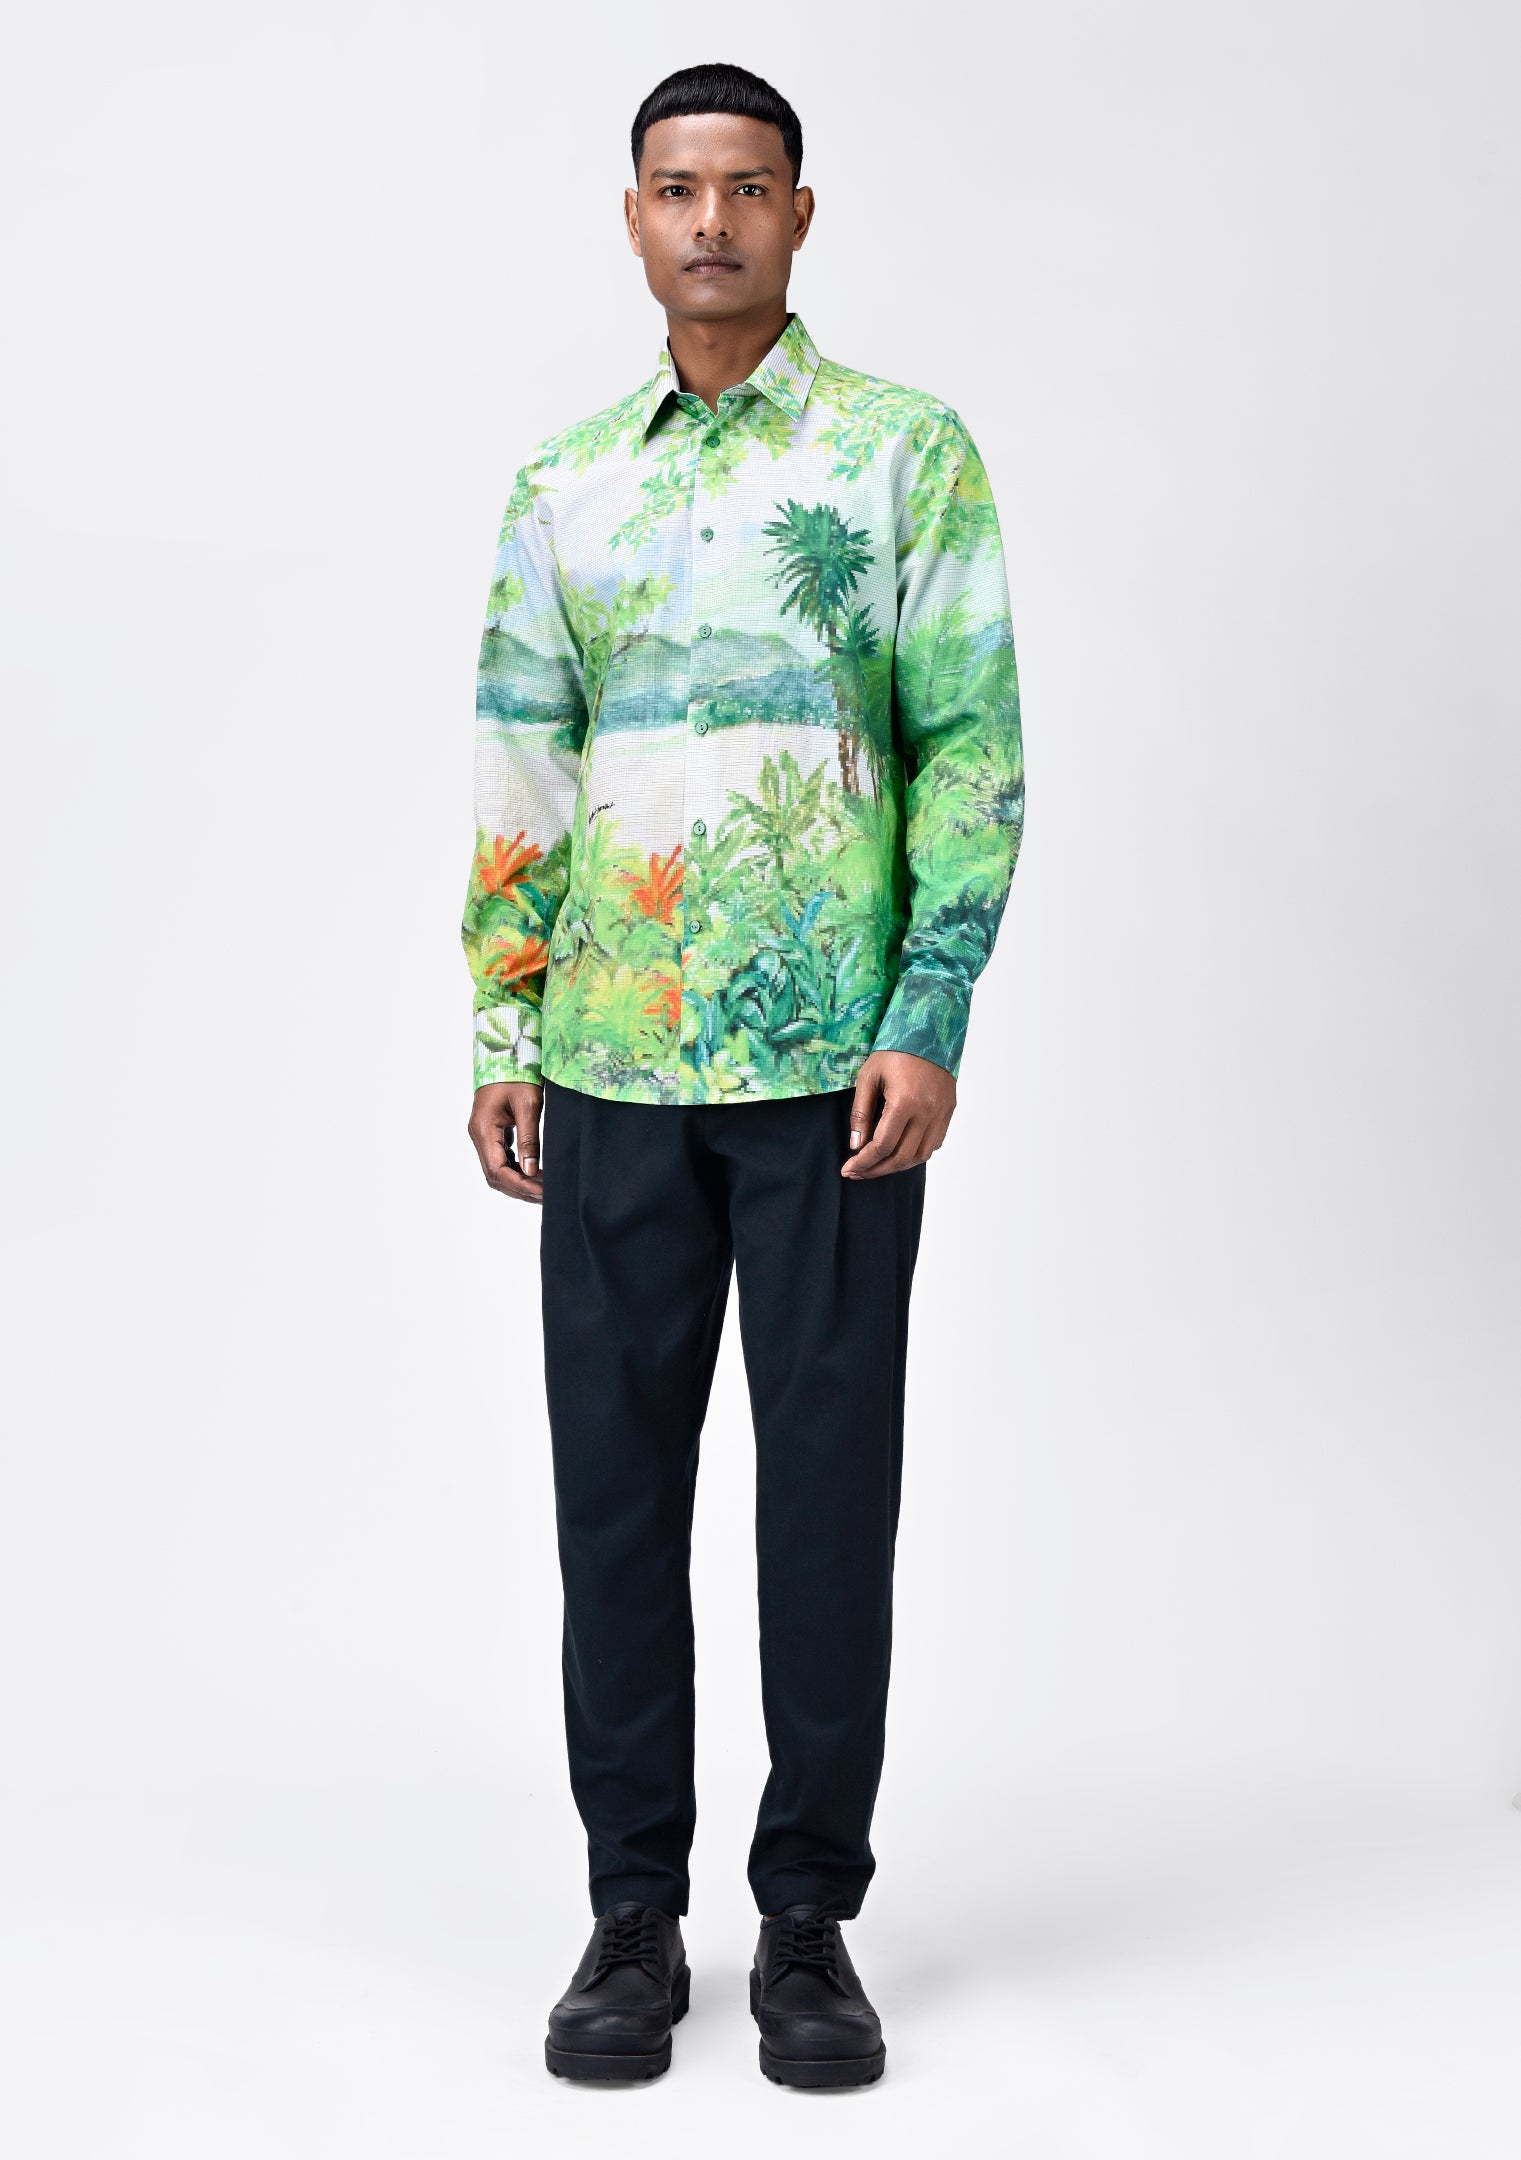 Men's Full Sleeve Shirt with Lush Landscape Print